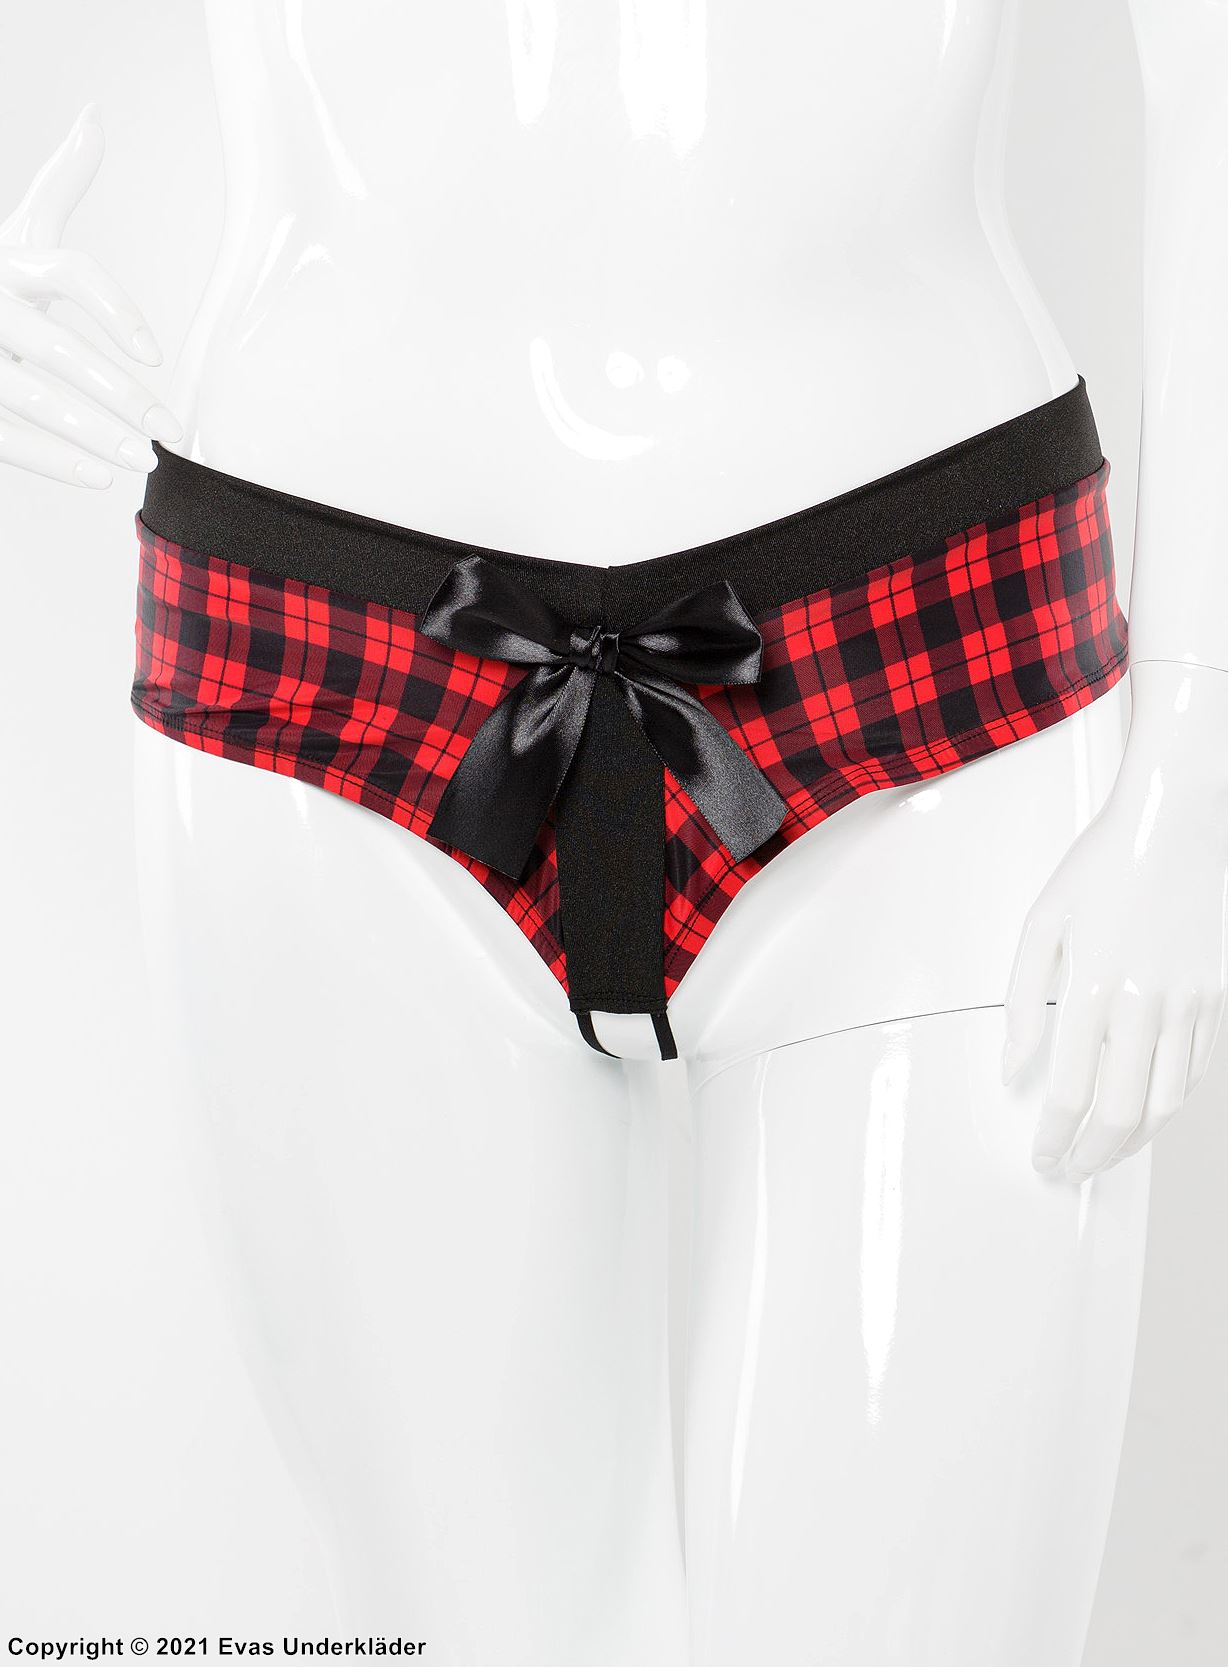 Cheeky panties, big bow, open crotch, scott-checkered pattern, plus size